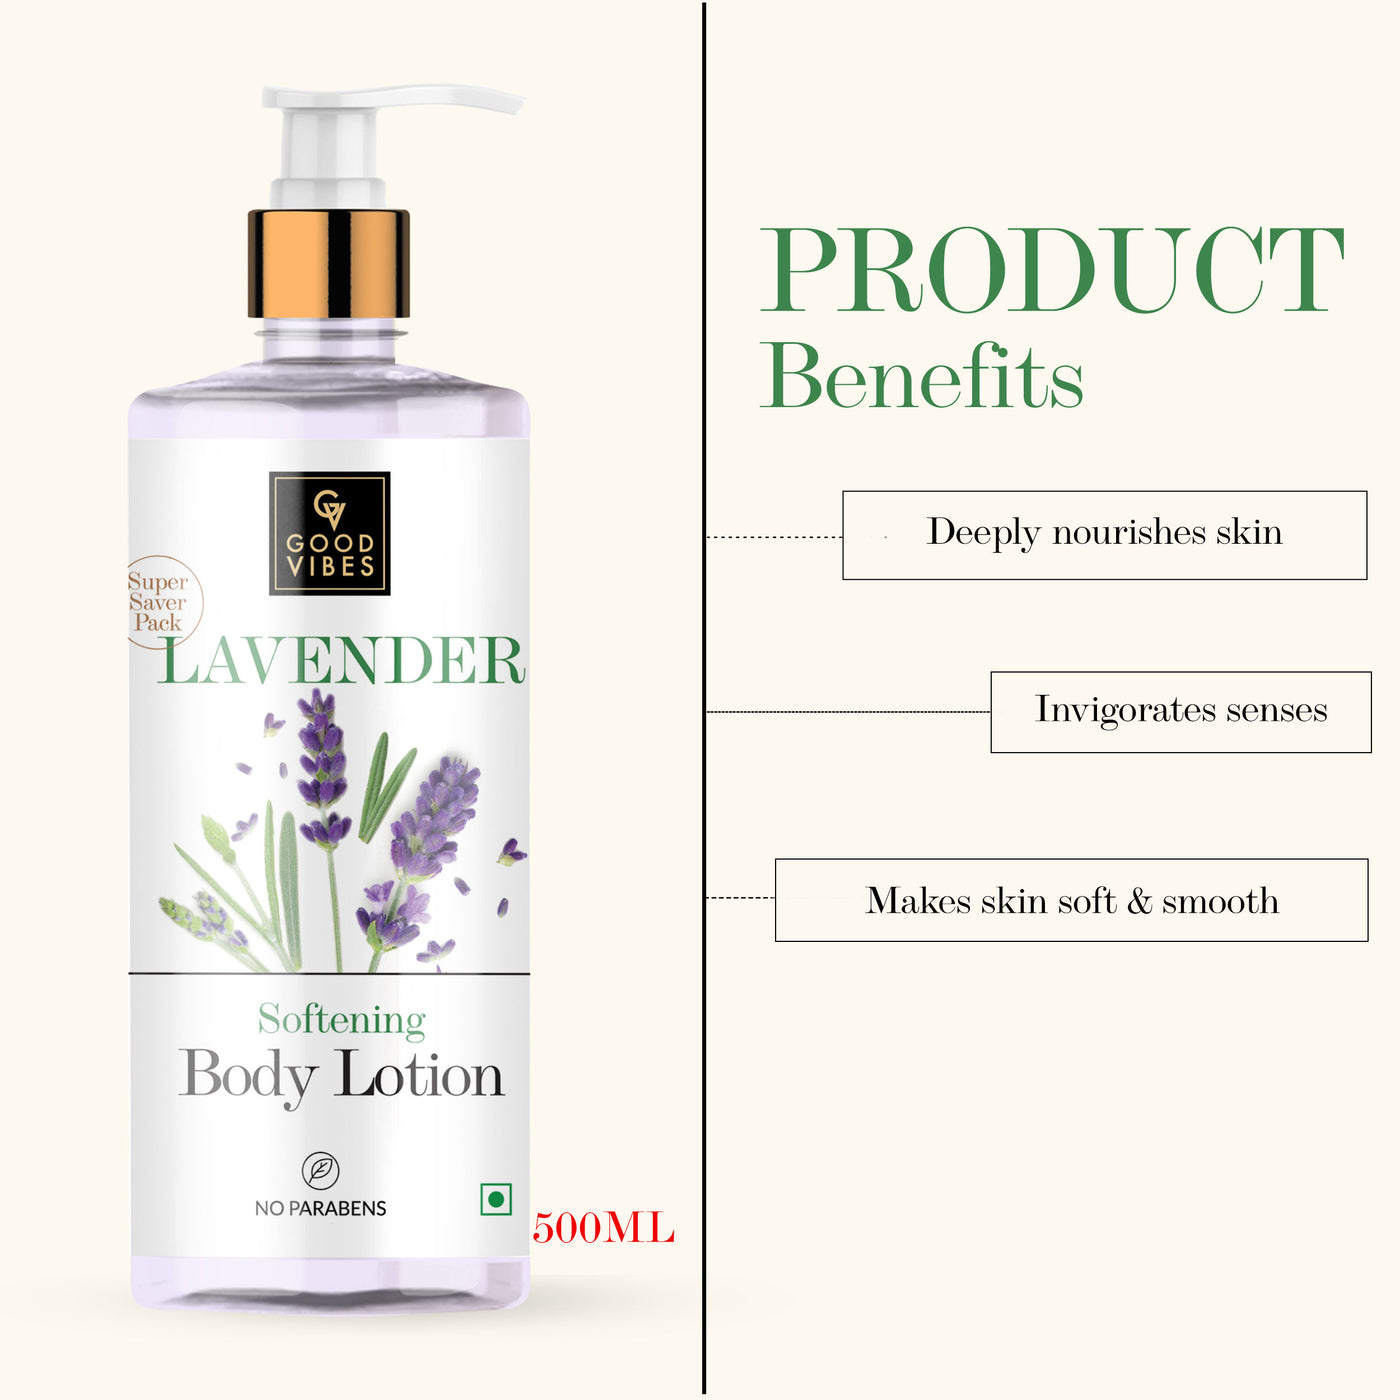 good-vibes-lavender-softening-body-lotion-400ml-100-ml-free-1-16-91-4